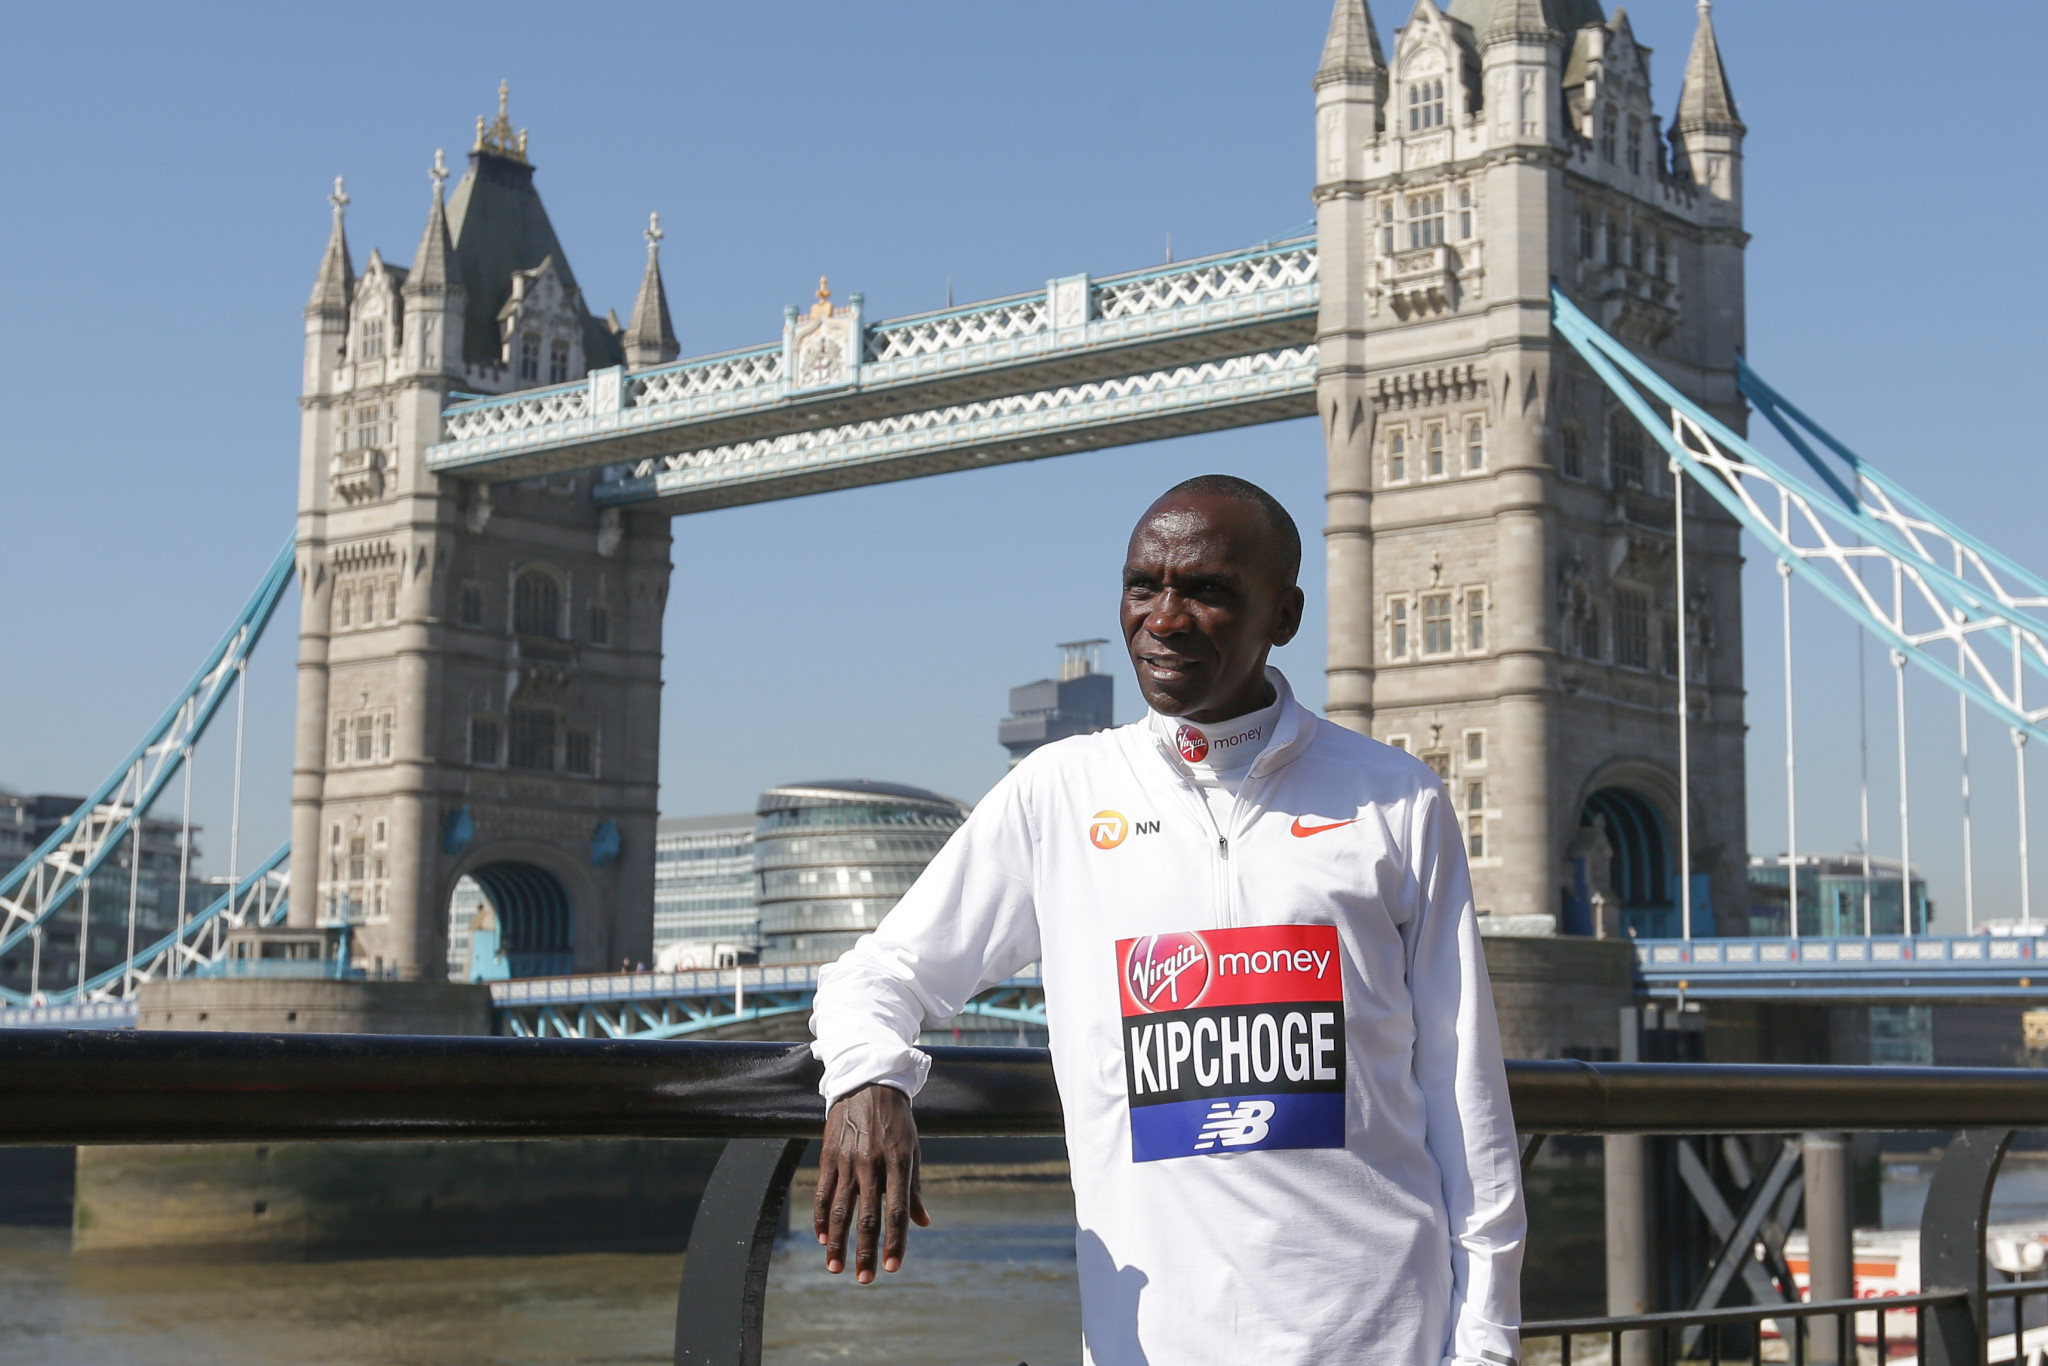 London Marathon taking precautions as record temperatures predicted for race